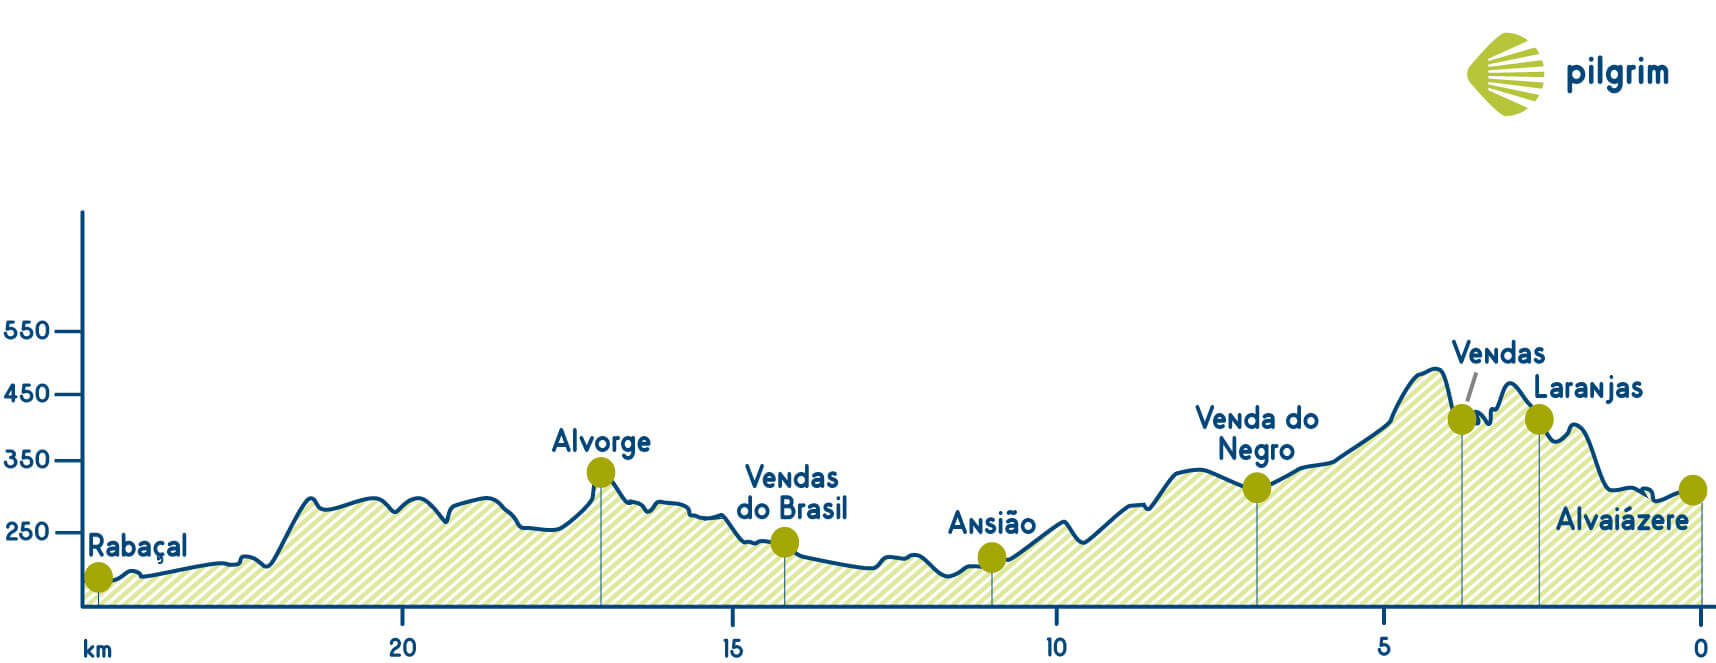 Stage 7 Camino Portugués